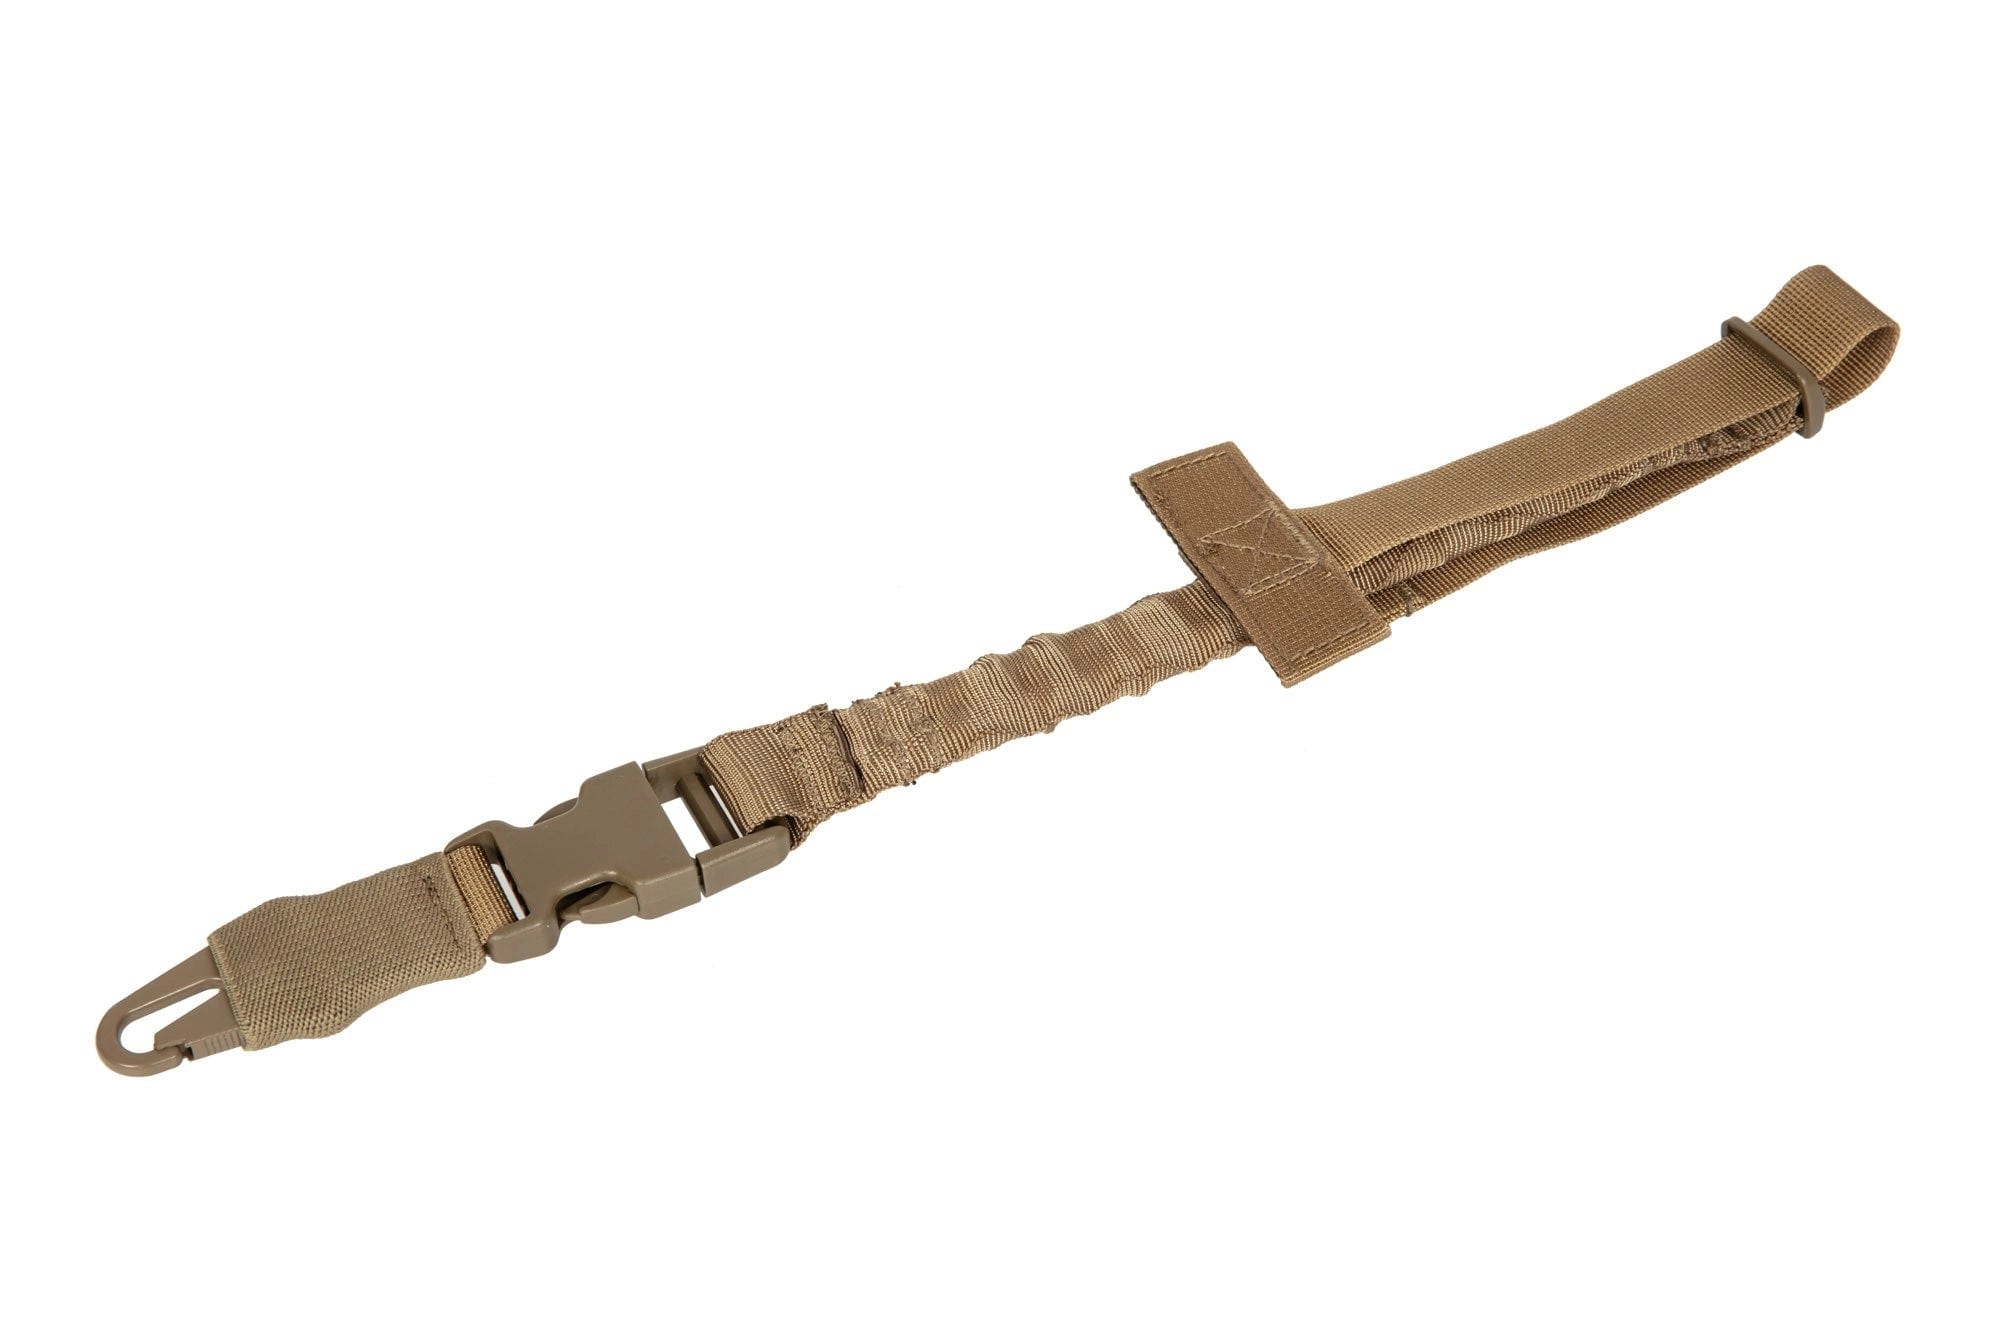 Modular MOLLE gun sling - Coyote